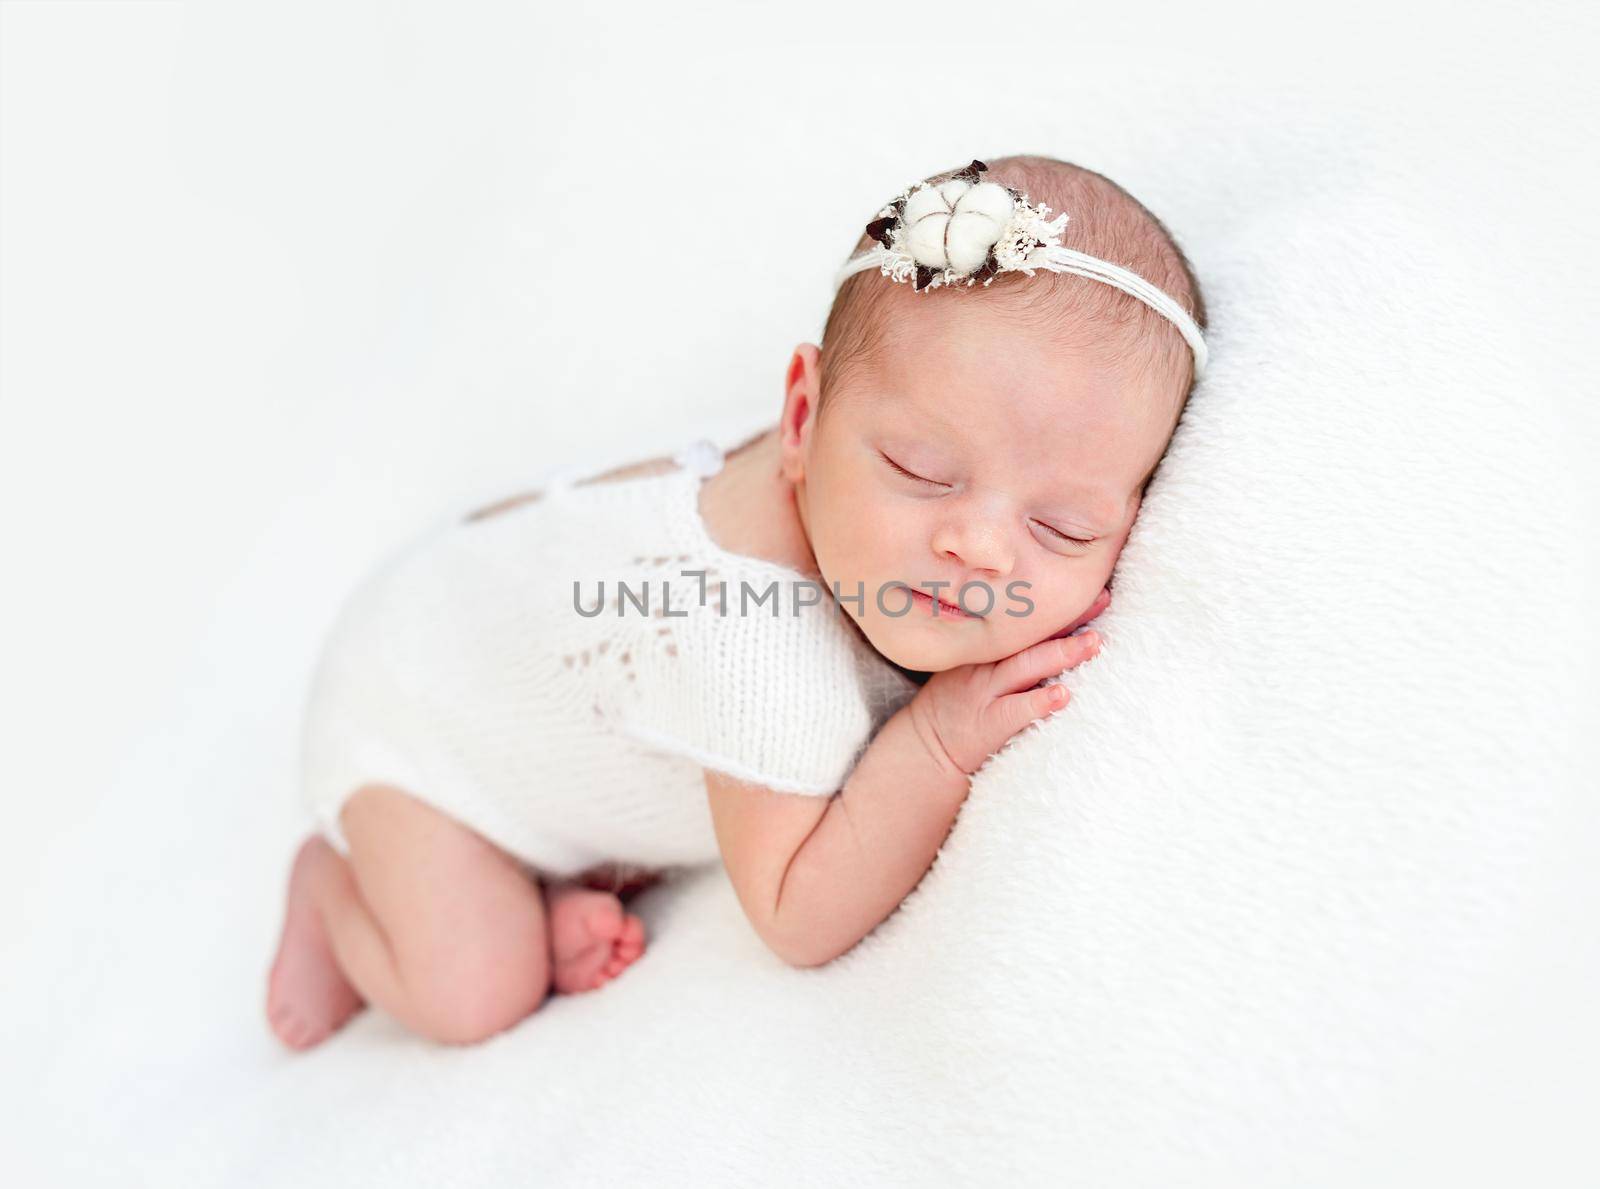 Sleeping newborn baby girl by tan4ikk1